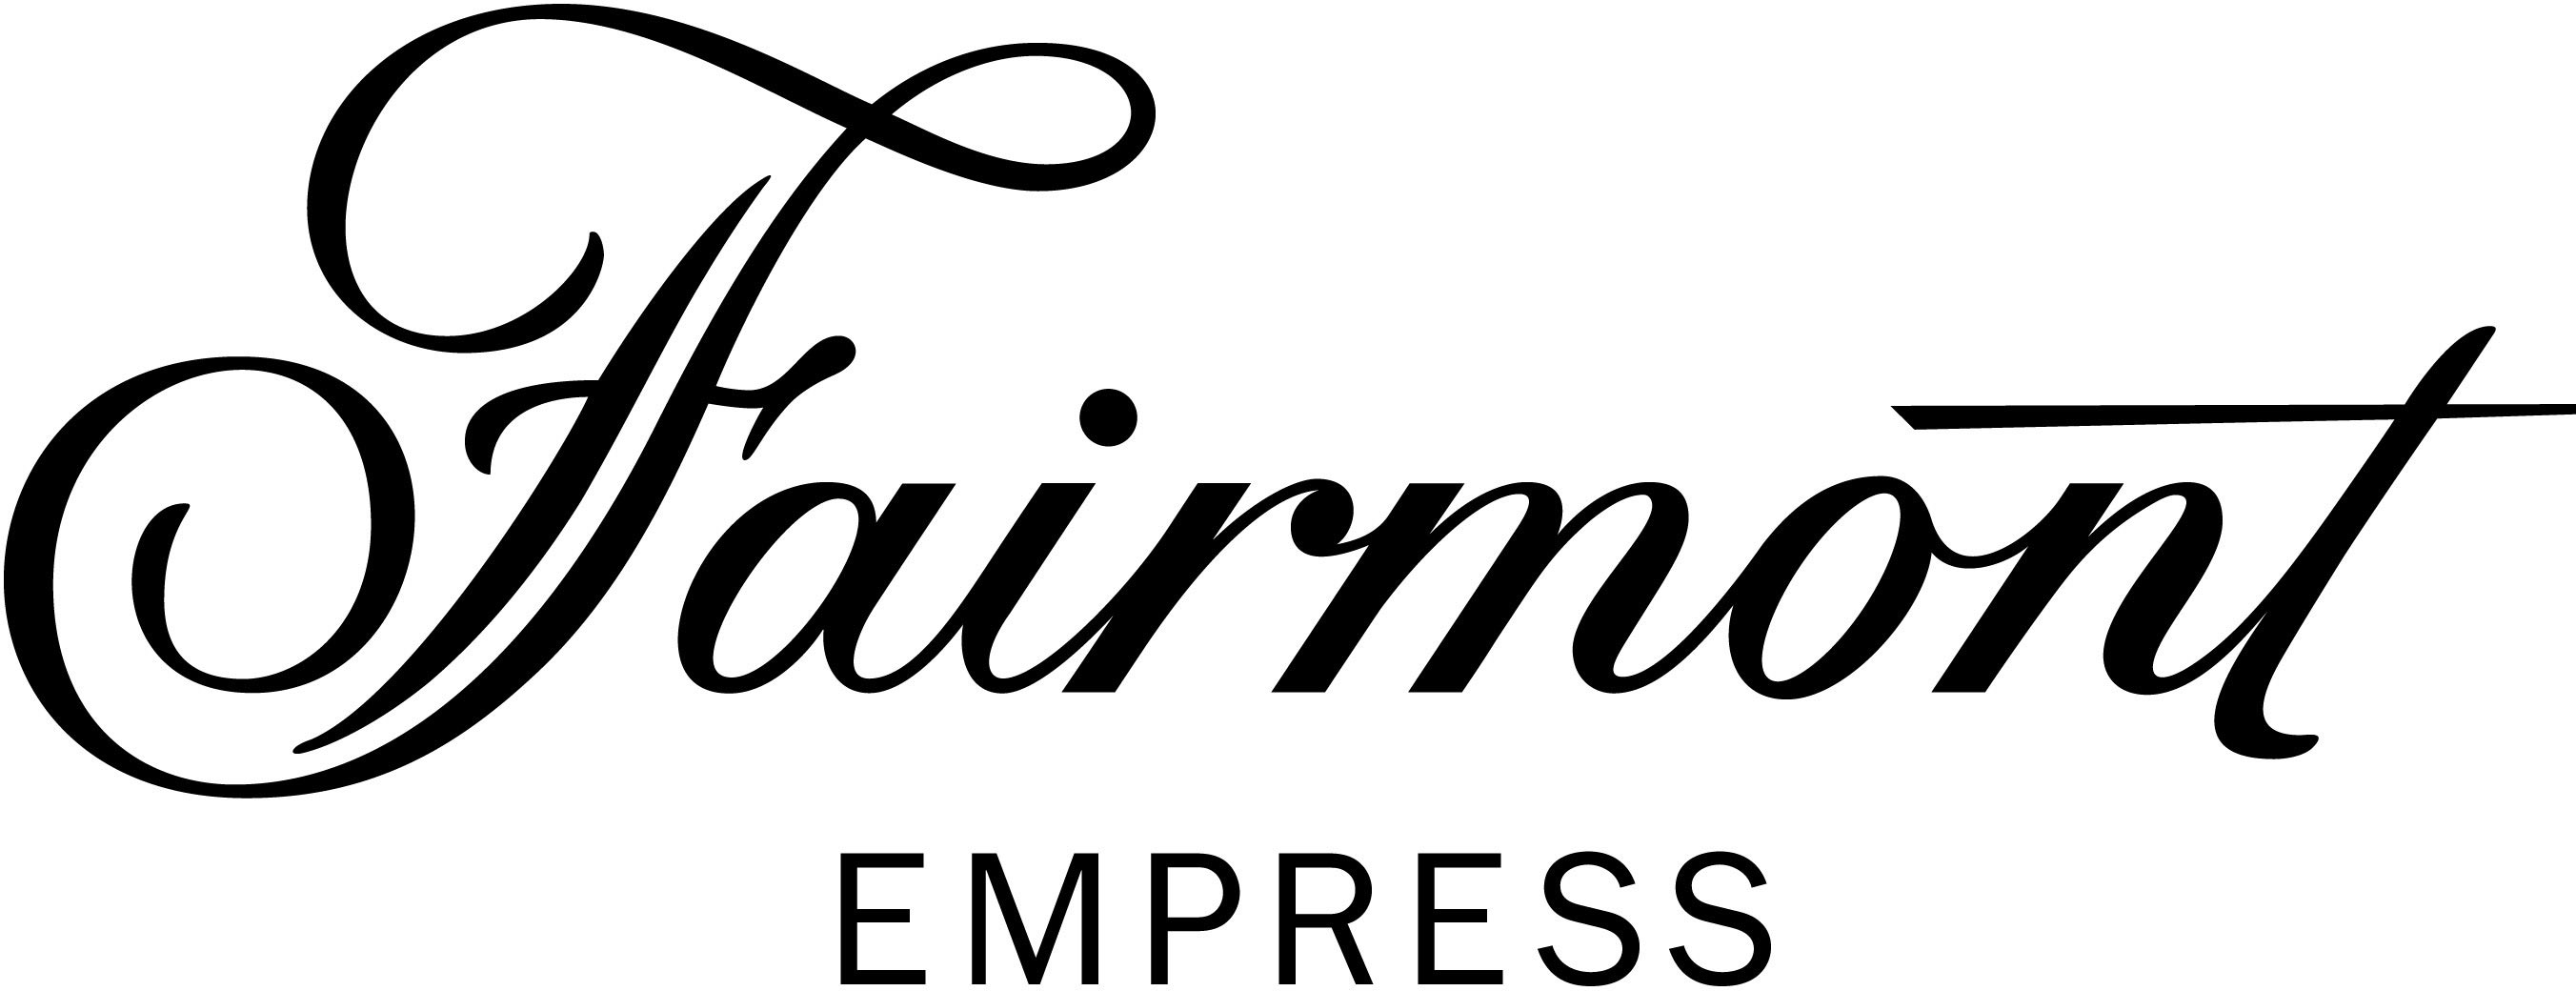 Fairmont Empress